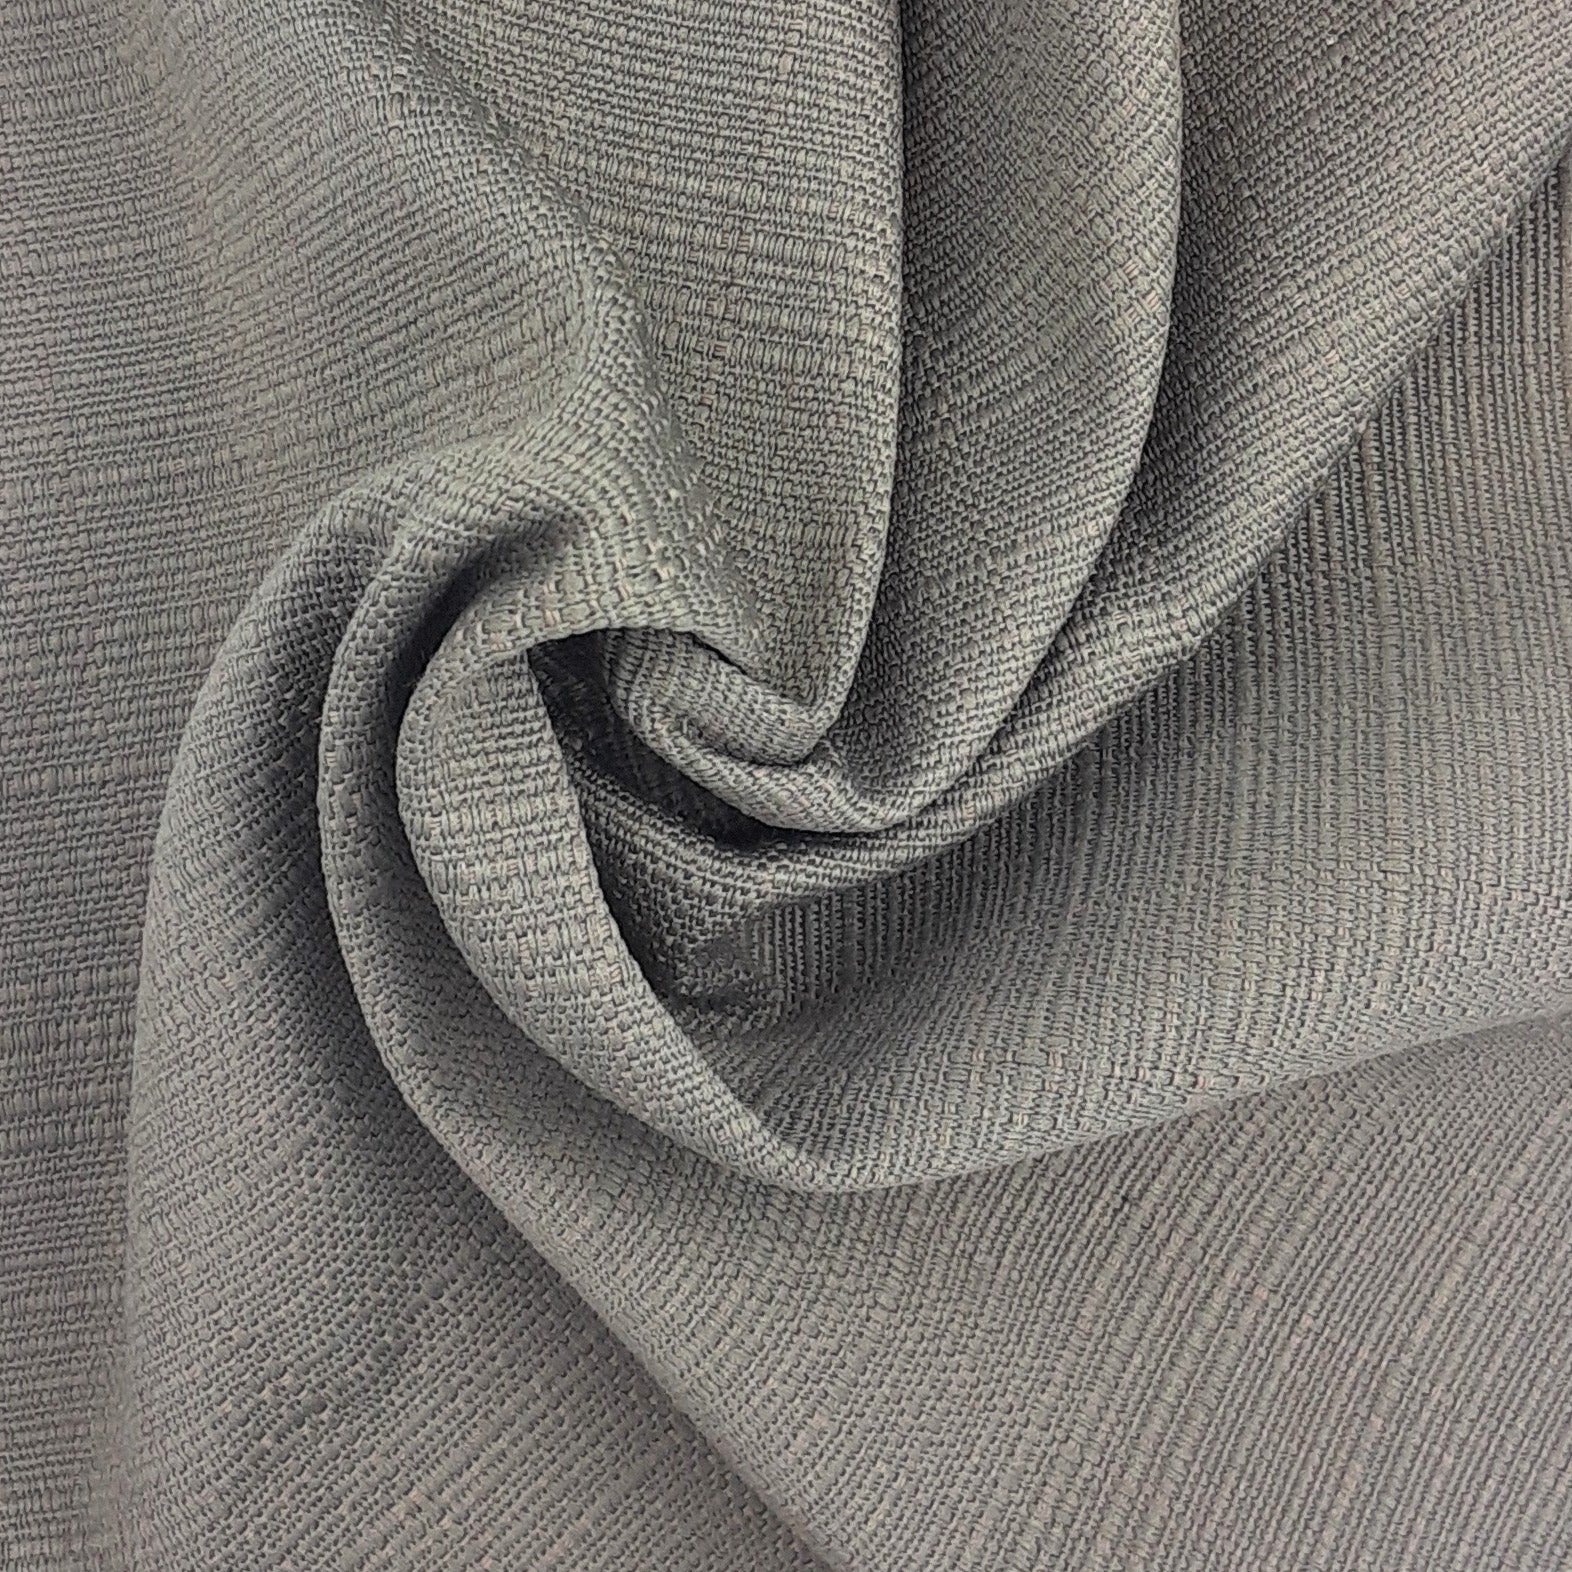 Pewter Drape #S902 Upholstery Wyeth Woven Fabric - SKU 6880B